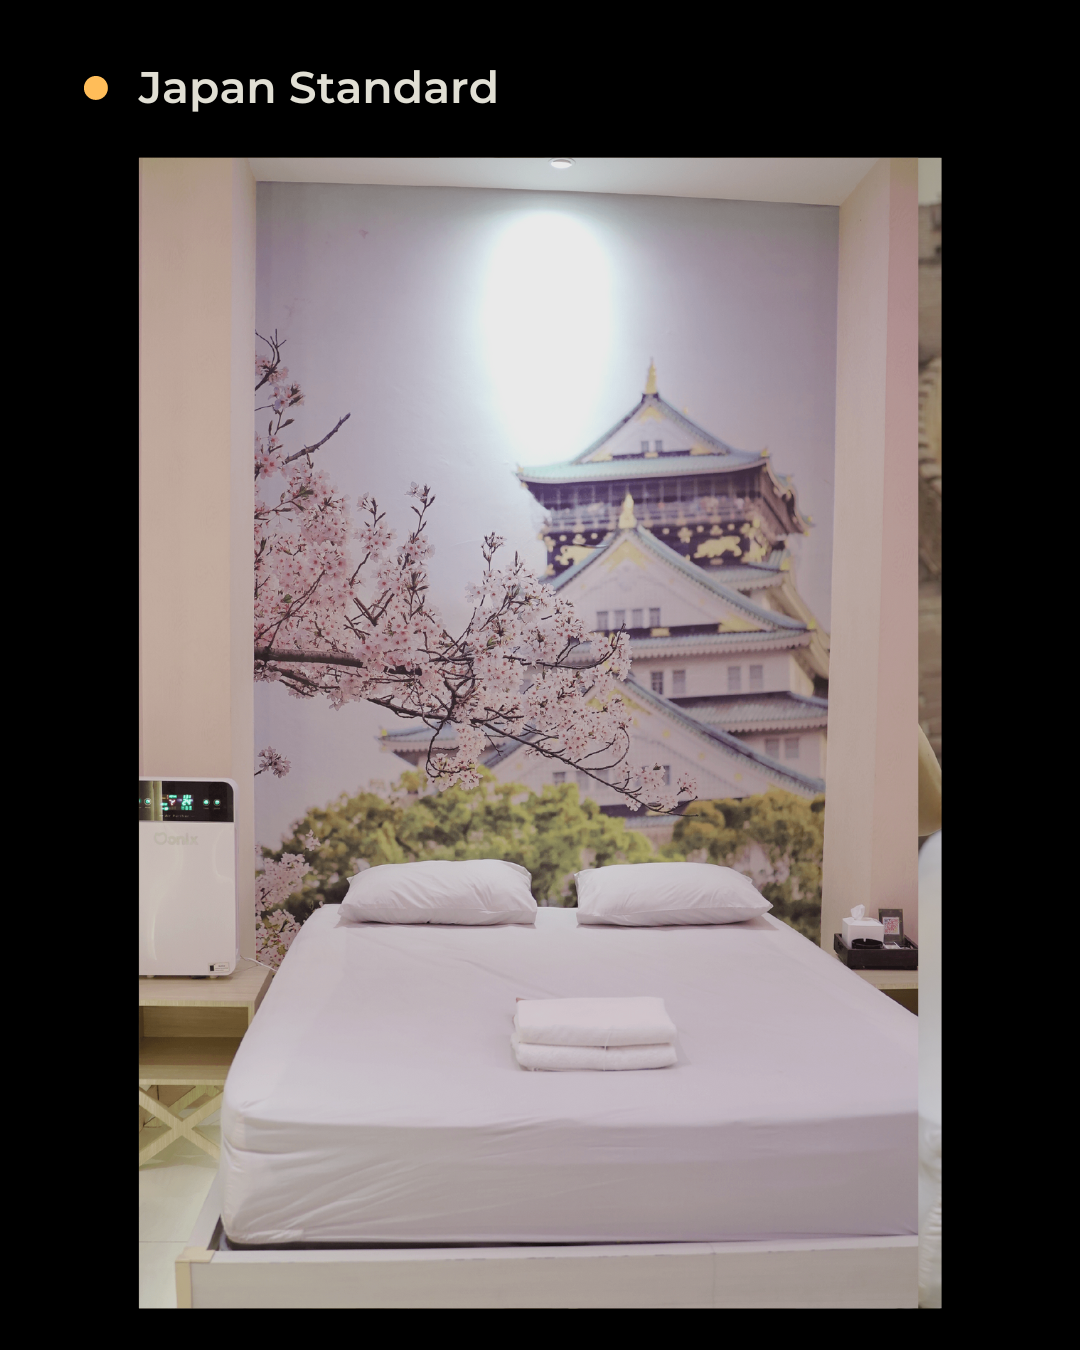 Room Themes - Japan Standard (1080 x 1350 px)